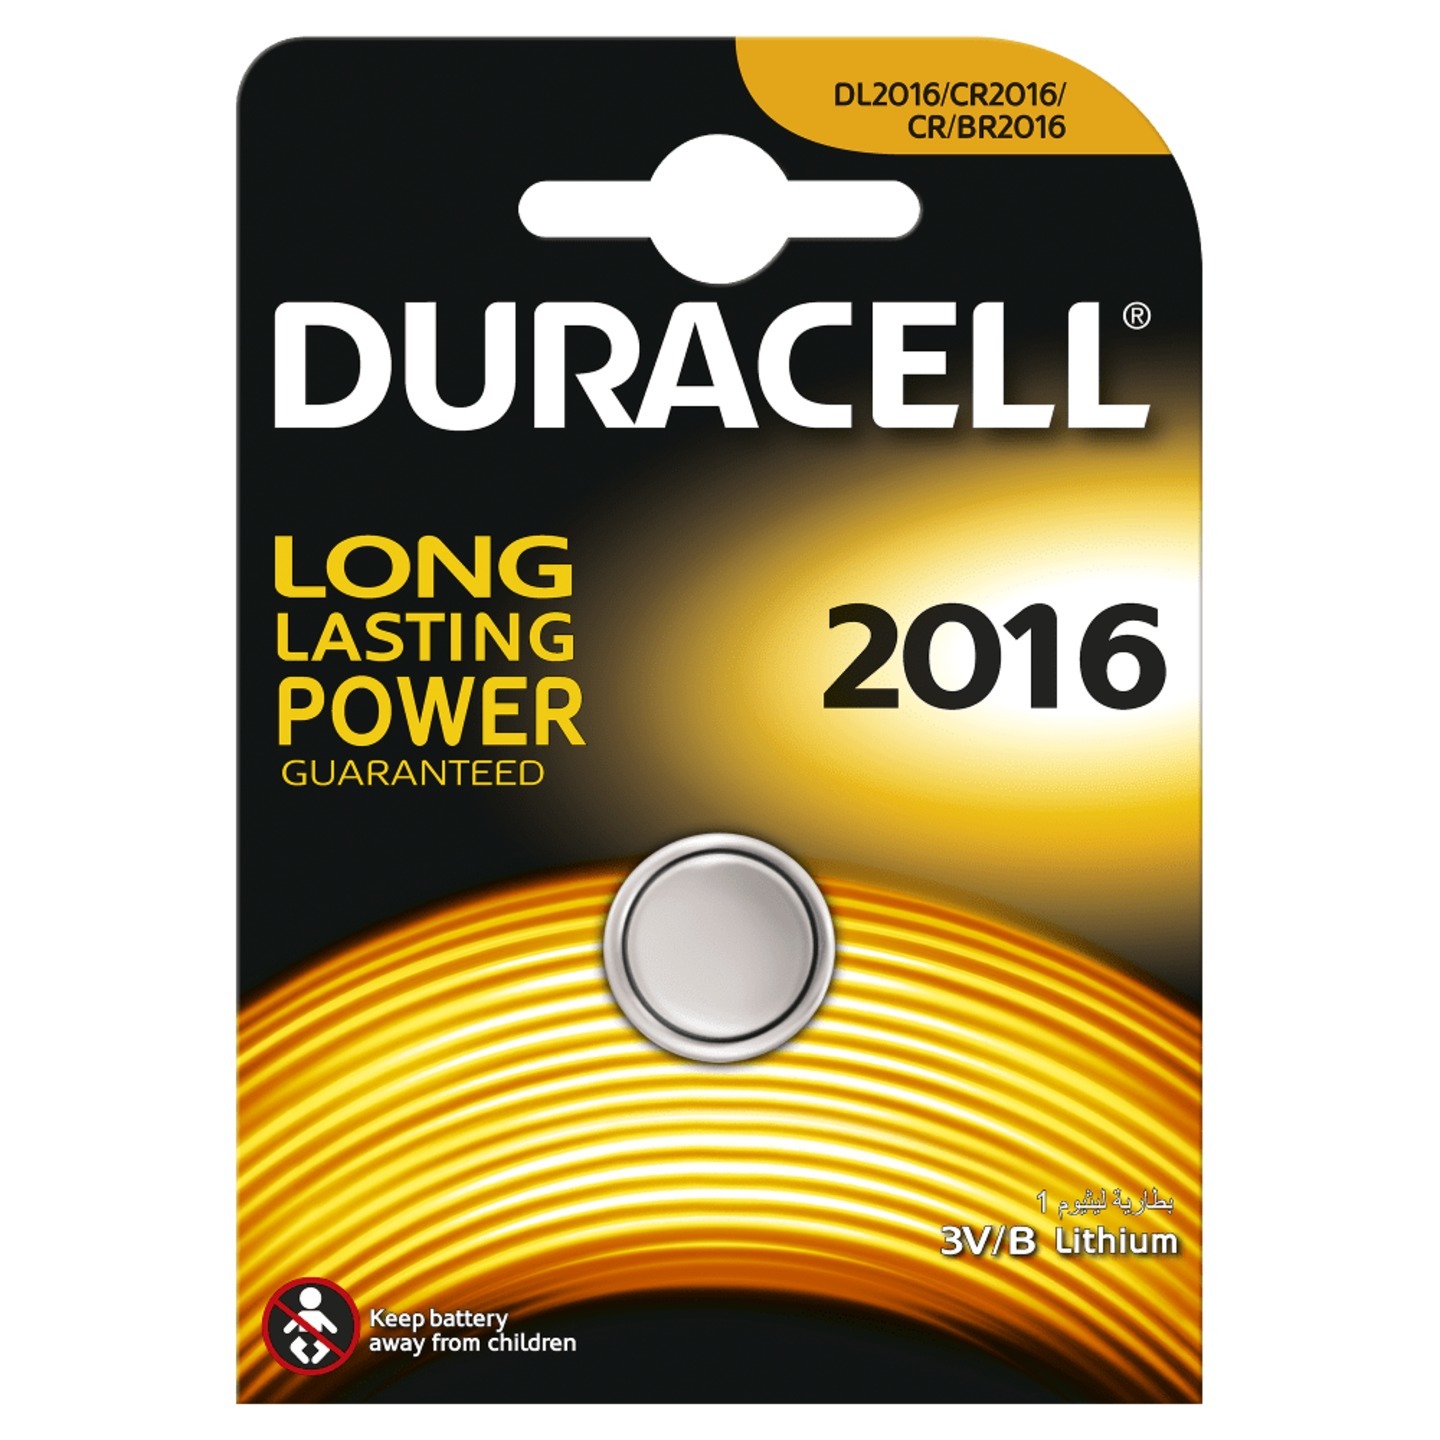 Duracell 2016 Coin Battery